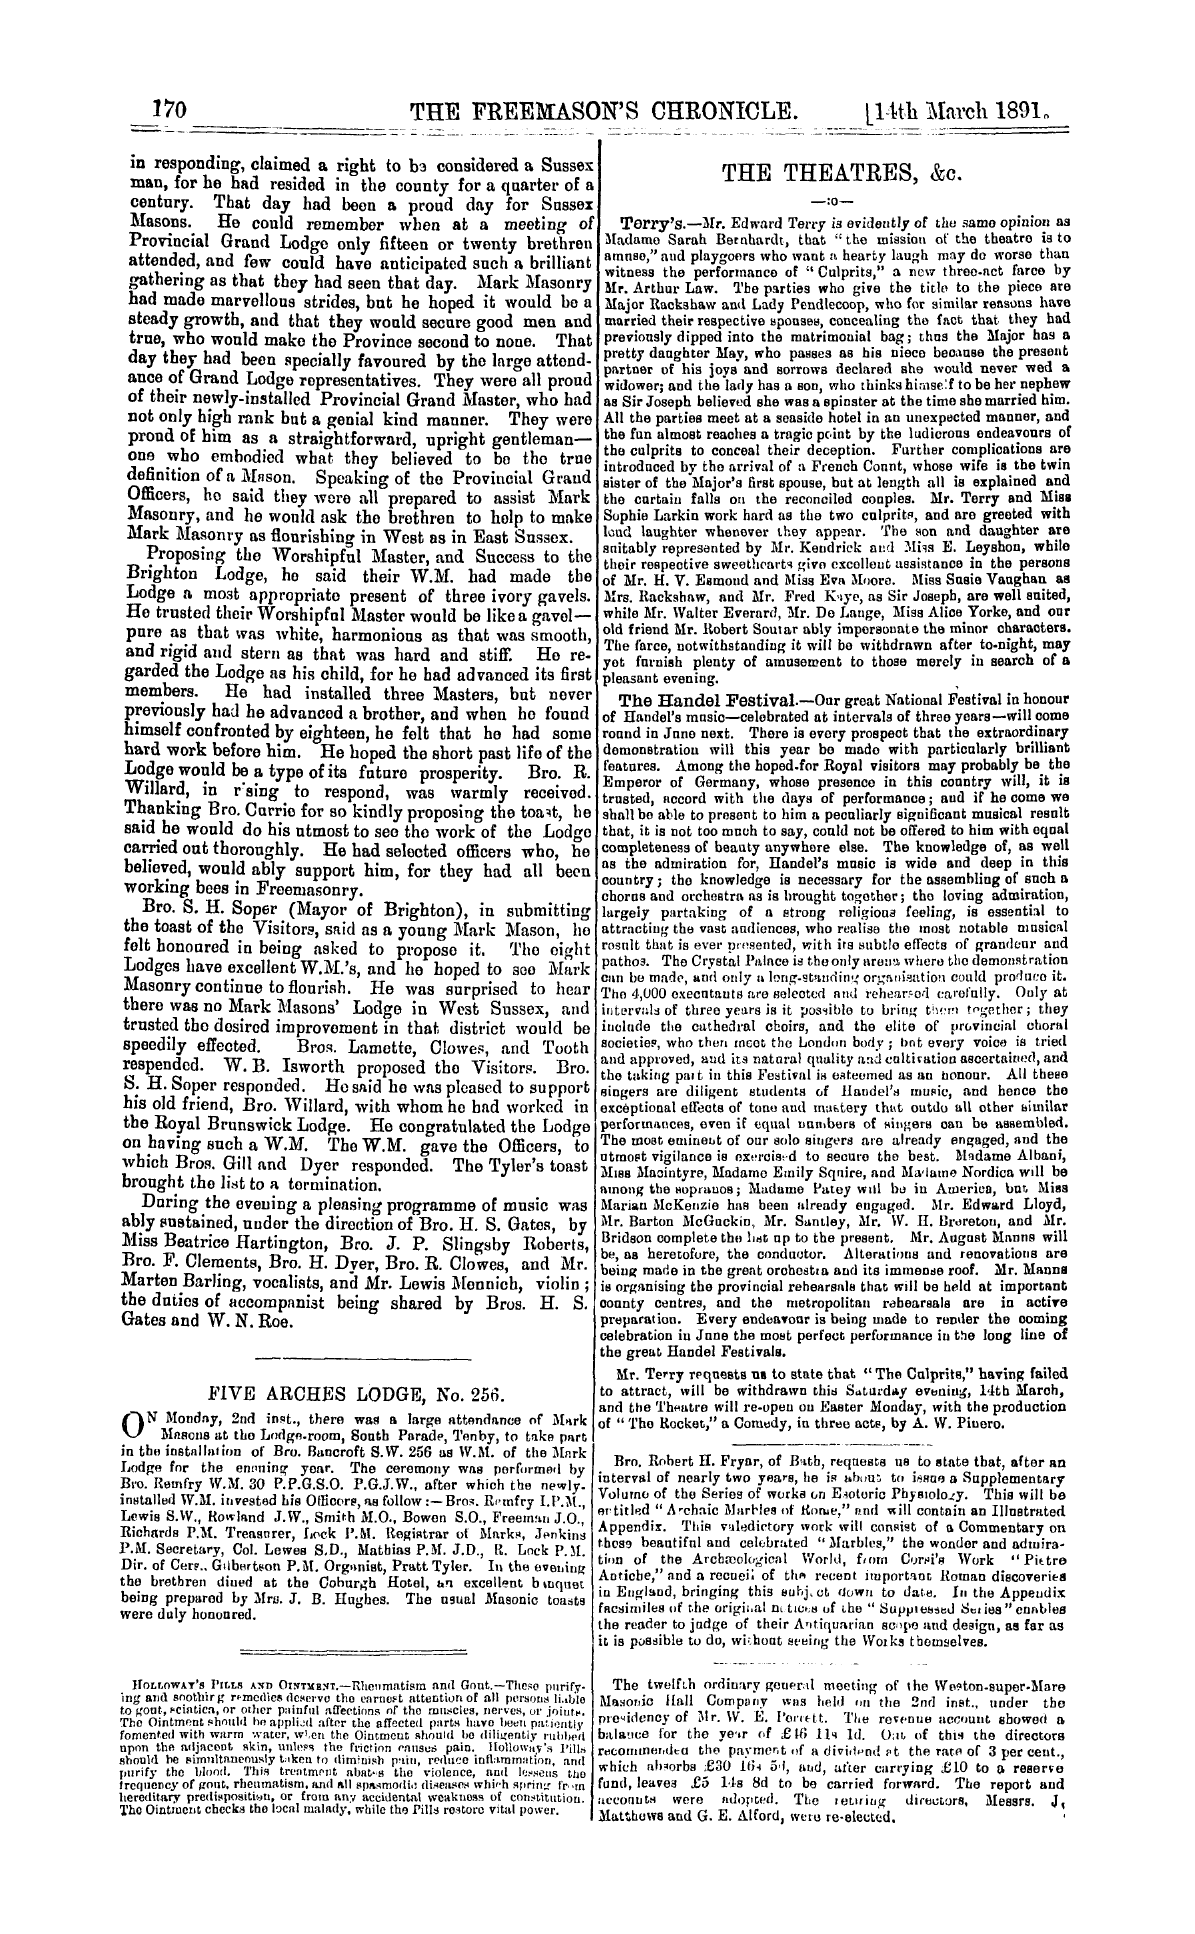 The Freemason's Chronicle: 1891-03-14: 10